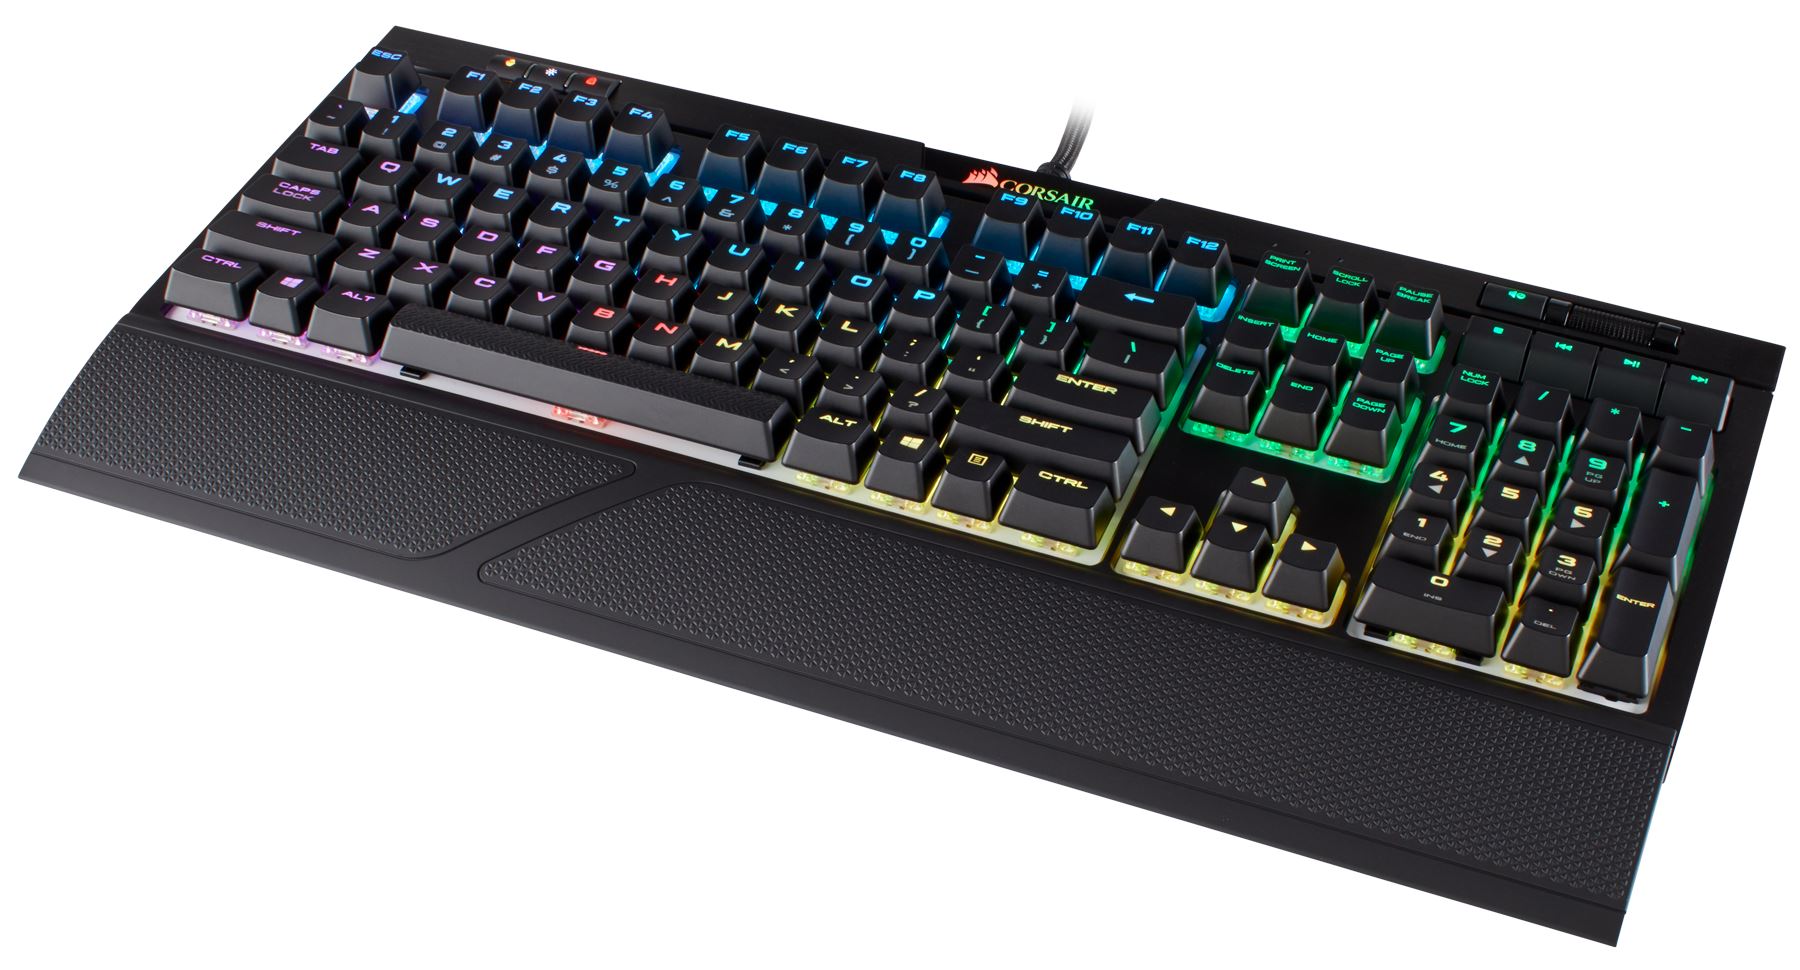 Corsair Launches New K70 MK.2 and STRAFE RGB MK.2 Gaming Keyboards